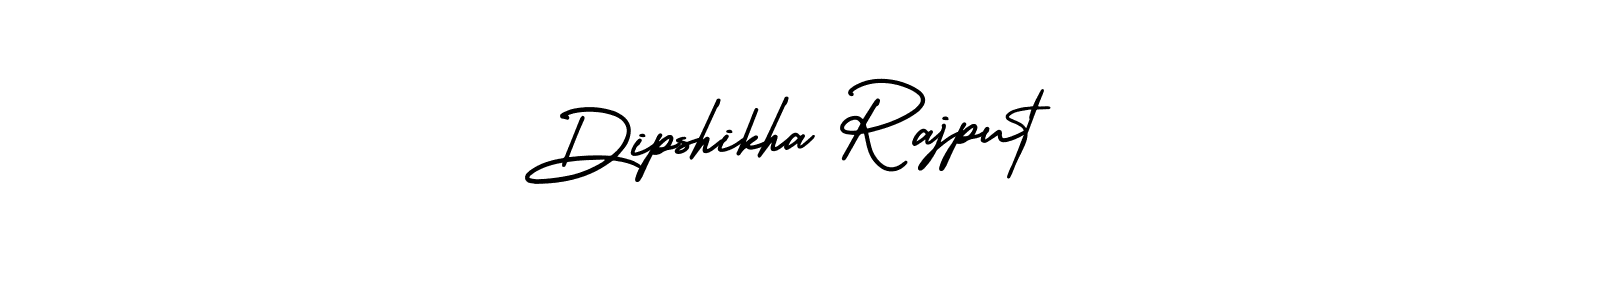 How to Draw Dipshikha Rajput signature style? AmerikaSignatureDemo-Regular is a latest design signature styles for name Dipshikha Rajput. Dipshikha Rajput signature style 3 images and pictures png